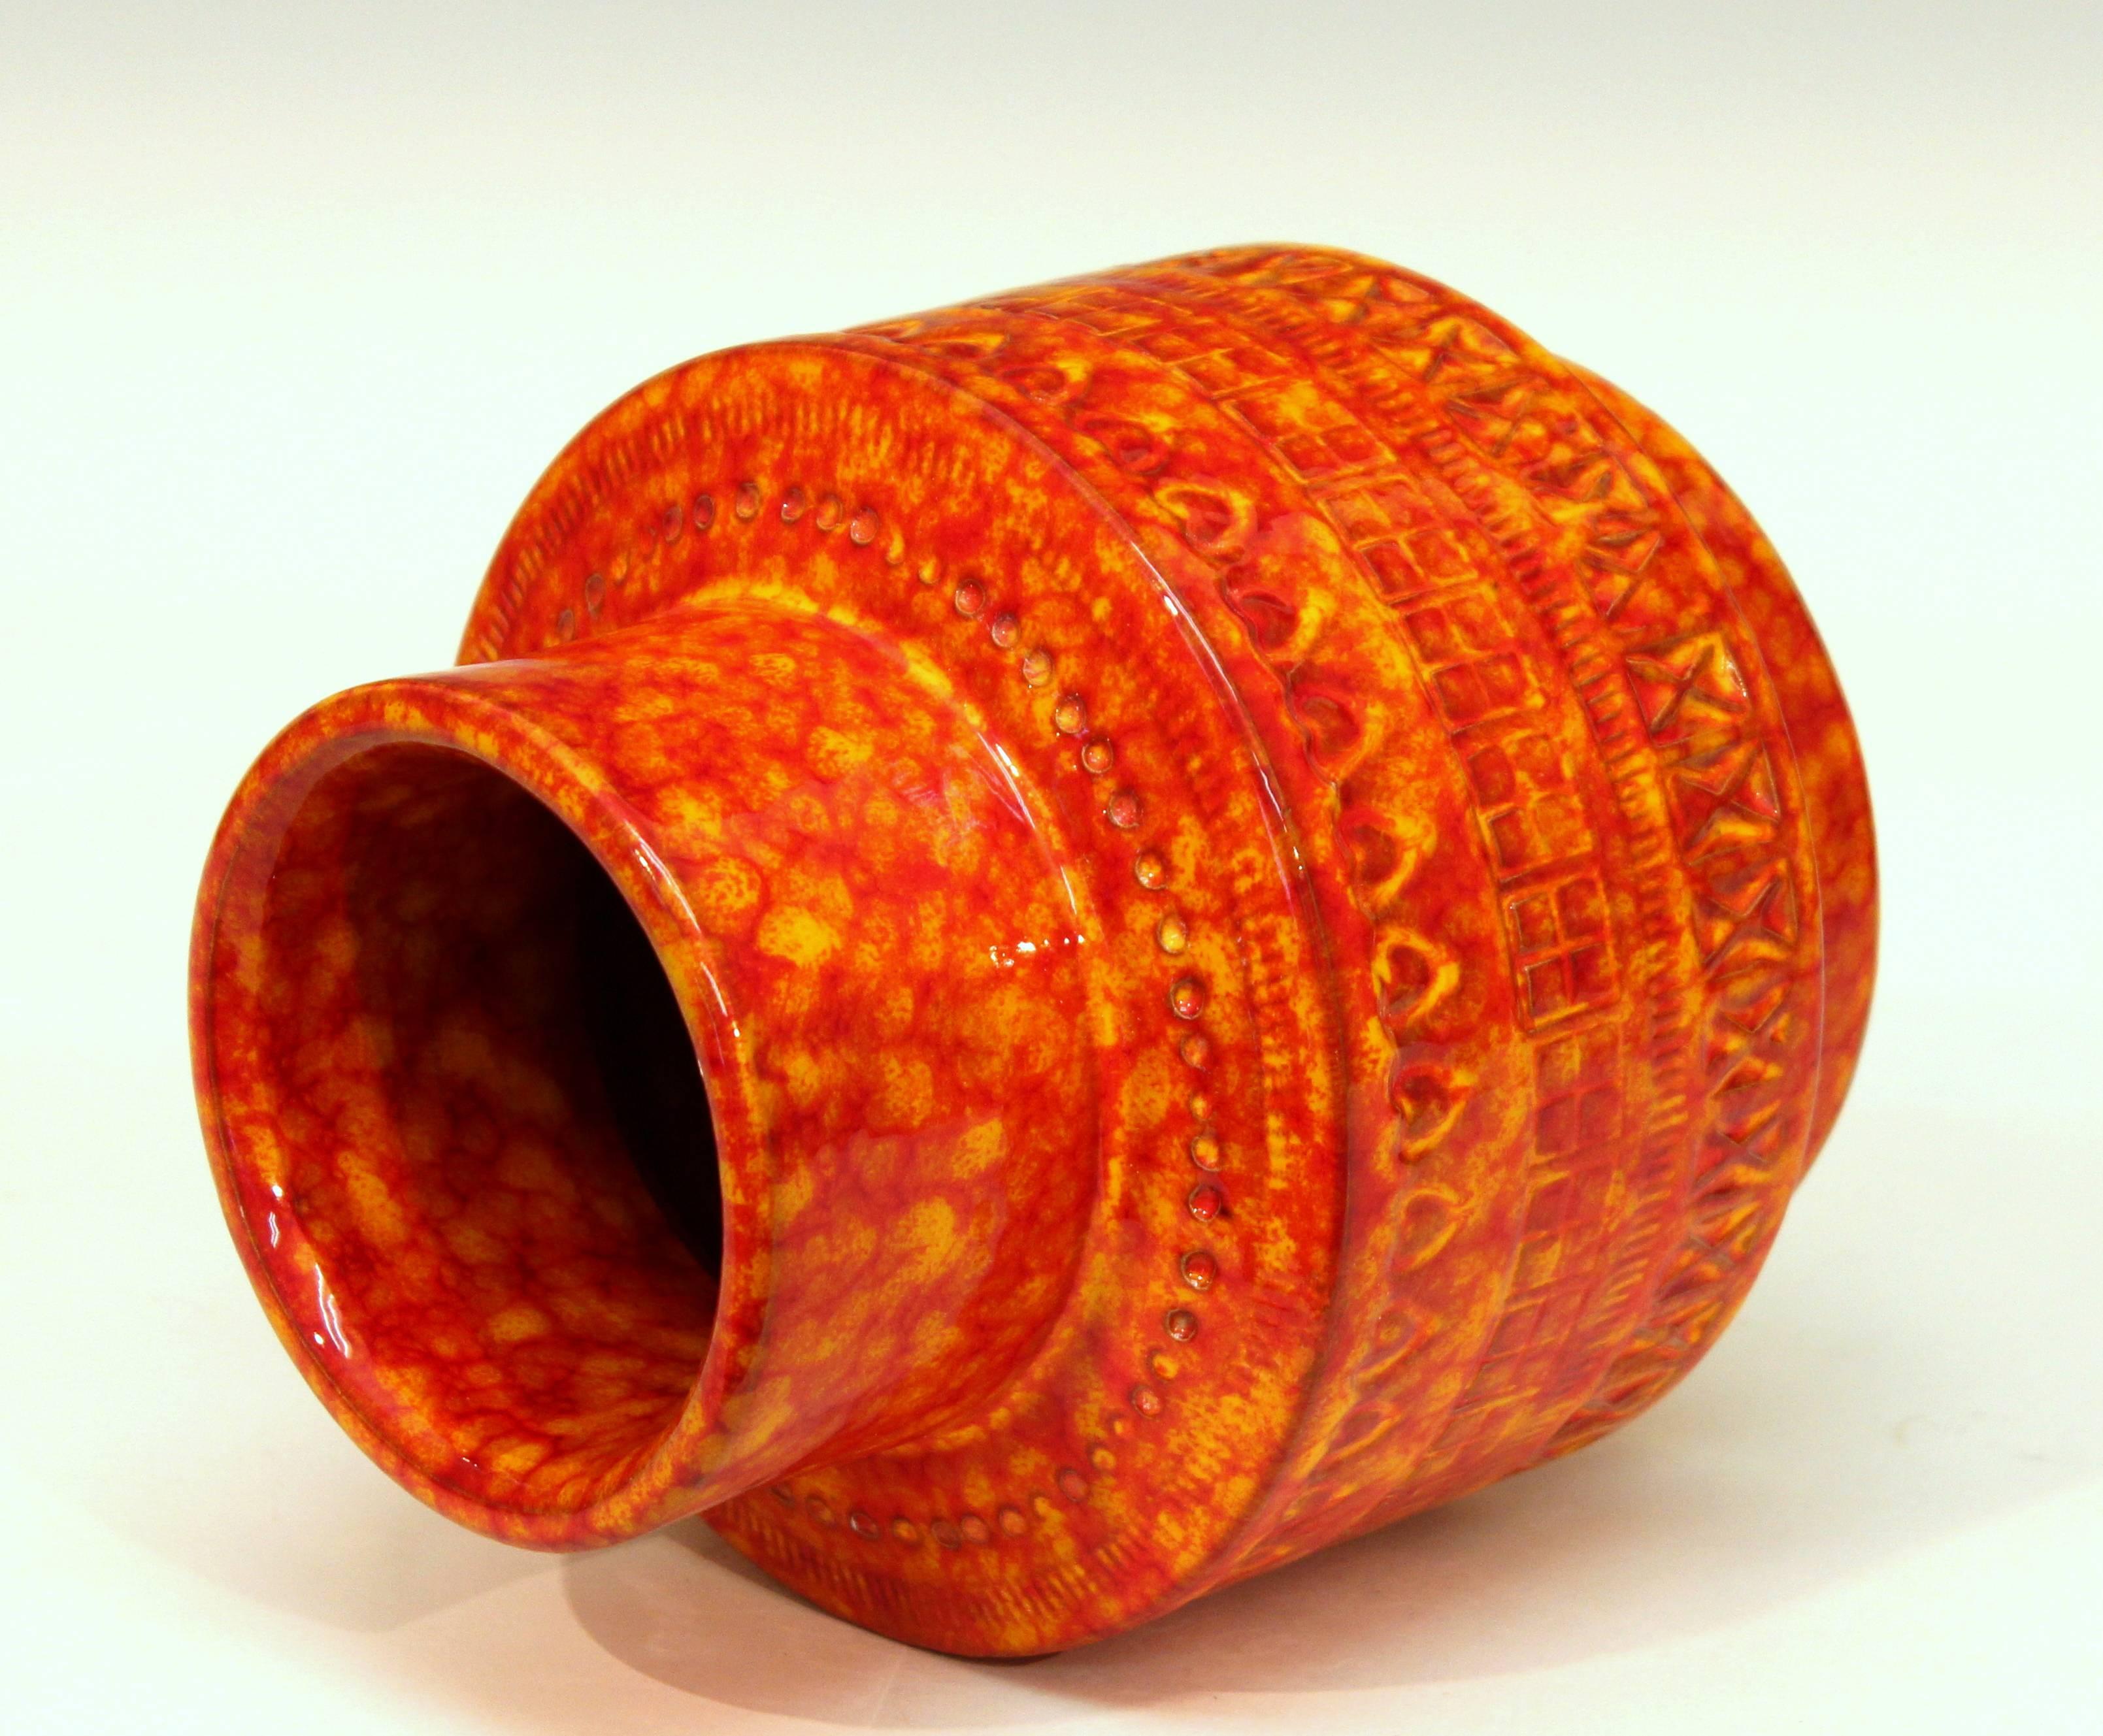 Turned Bitossi Vintage Italian Pottery Atomic Rimini Orange Red Stovepipe Vase